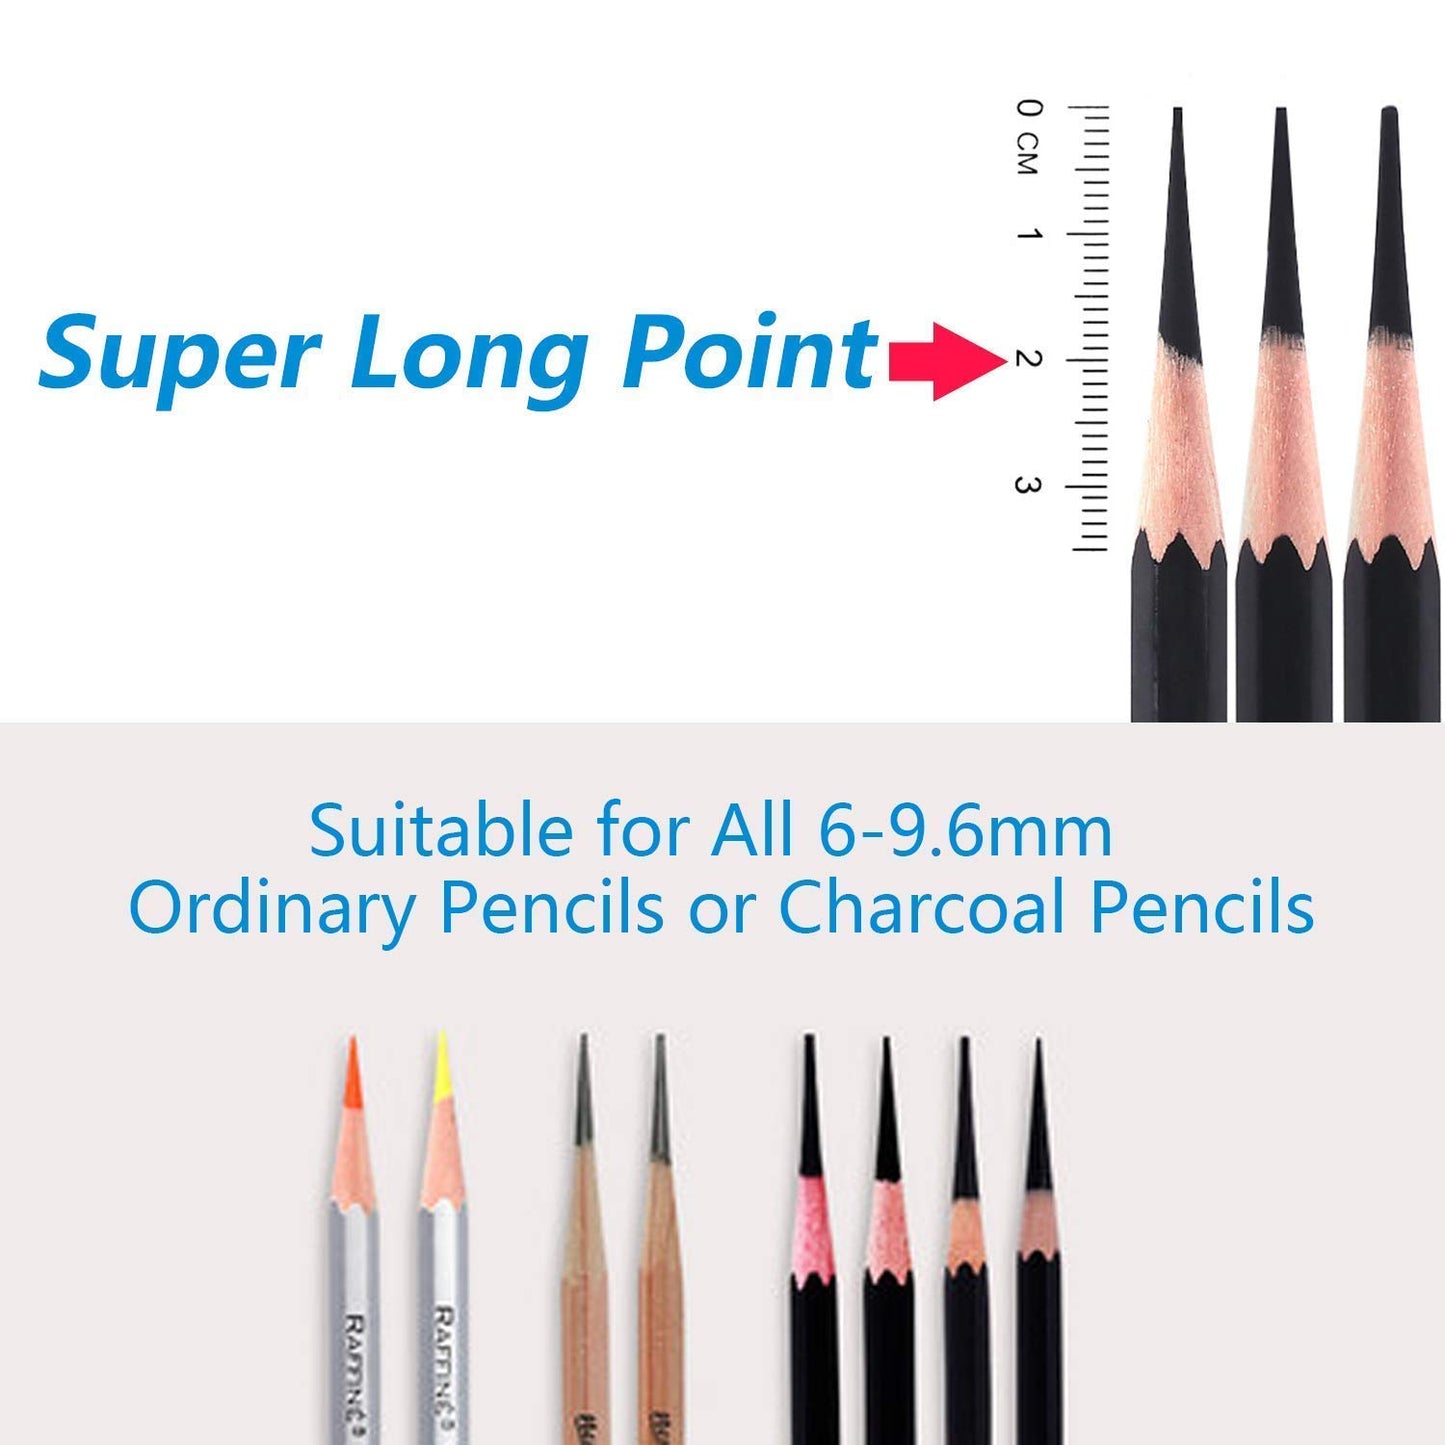 AFMAT Artist Pencil Sharpener Charcoal Pencil Sharpener Long Point